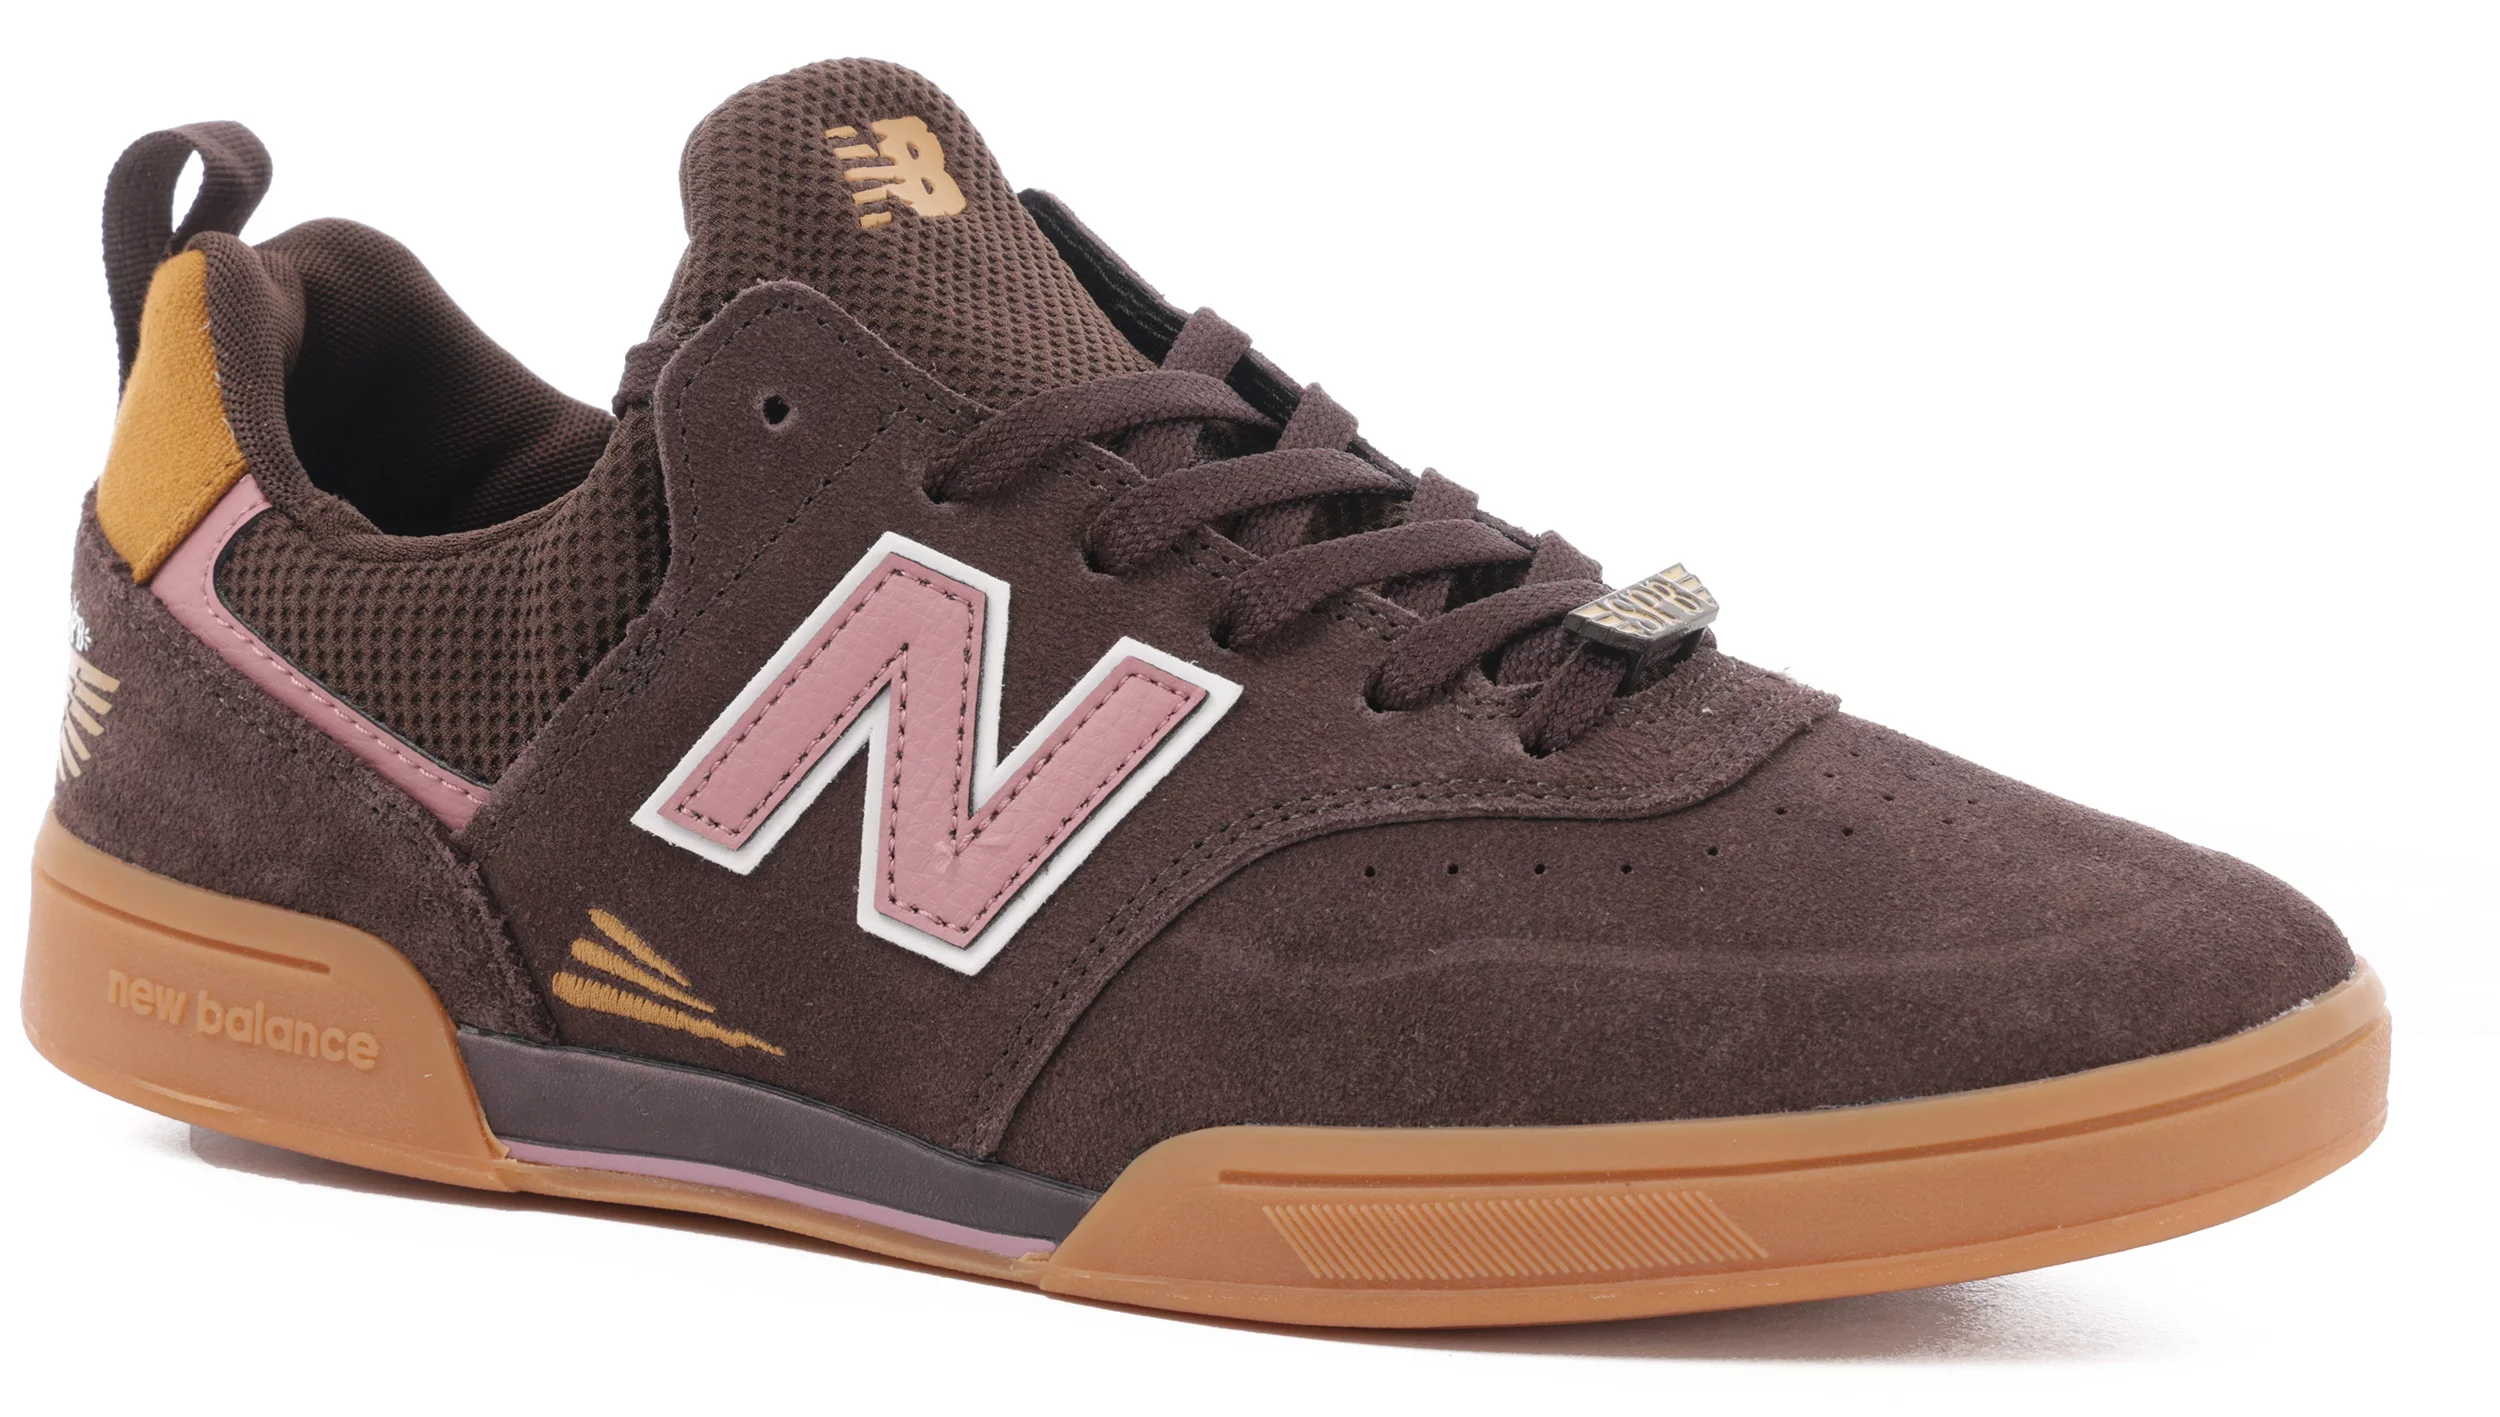 Violeta Valiente Explosivos New Balance Numeric 288 Sport Skate Shoes - (jeremy fish x 303) brown/pink  - Free Shipping | Tactics